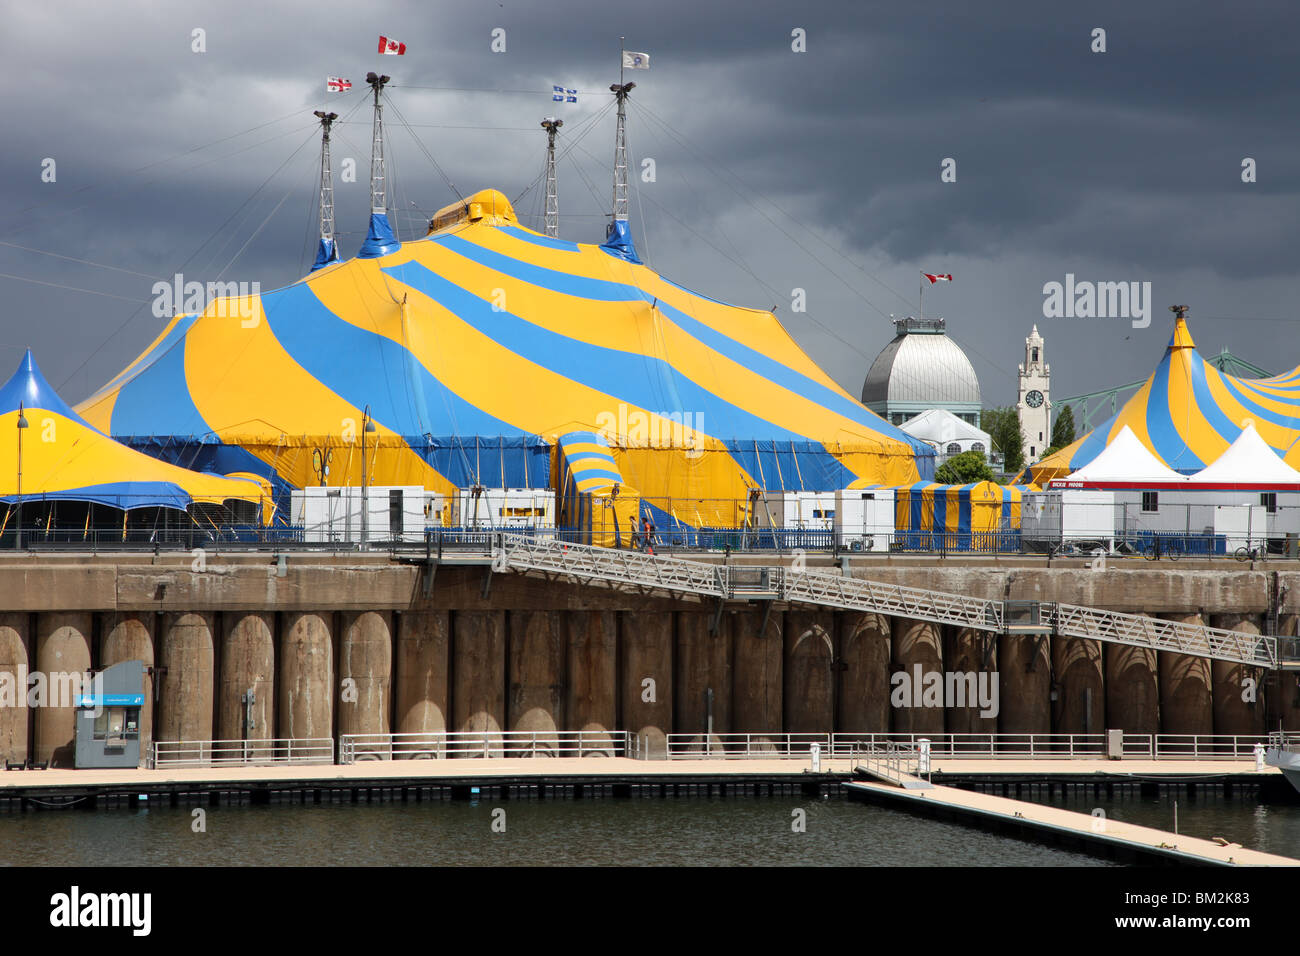 Cirque du Soleil Big Top, Vieux Port, Montreal Stock Photo